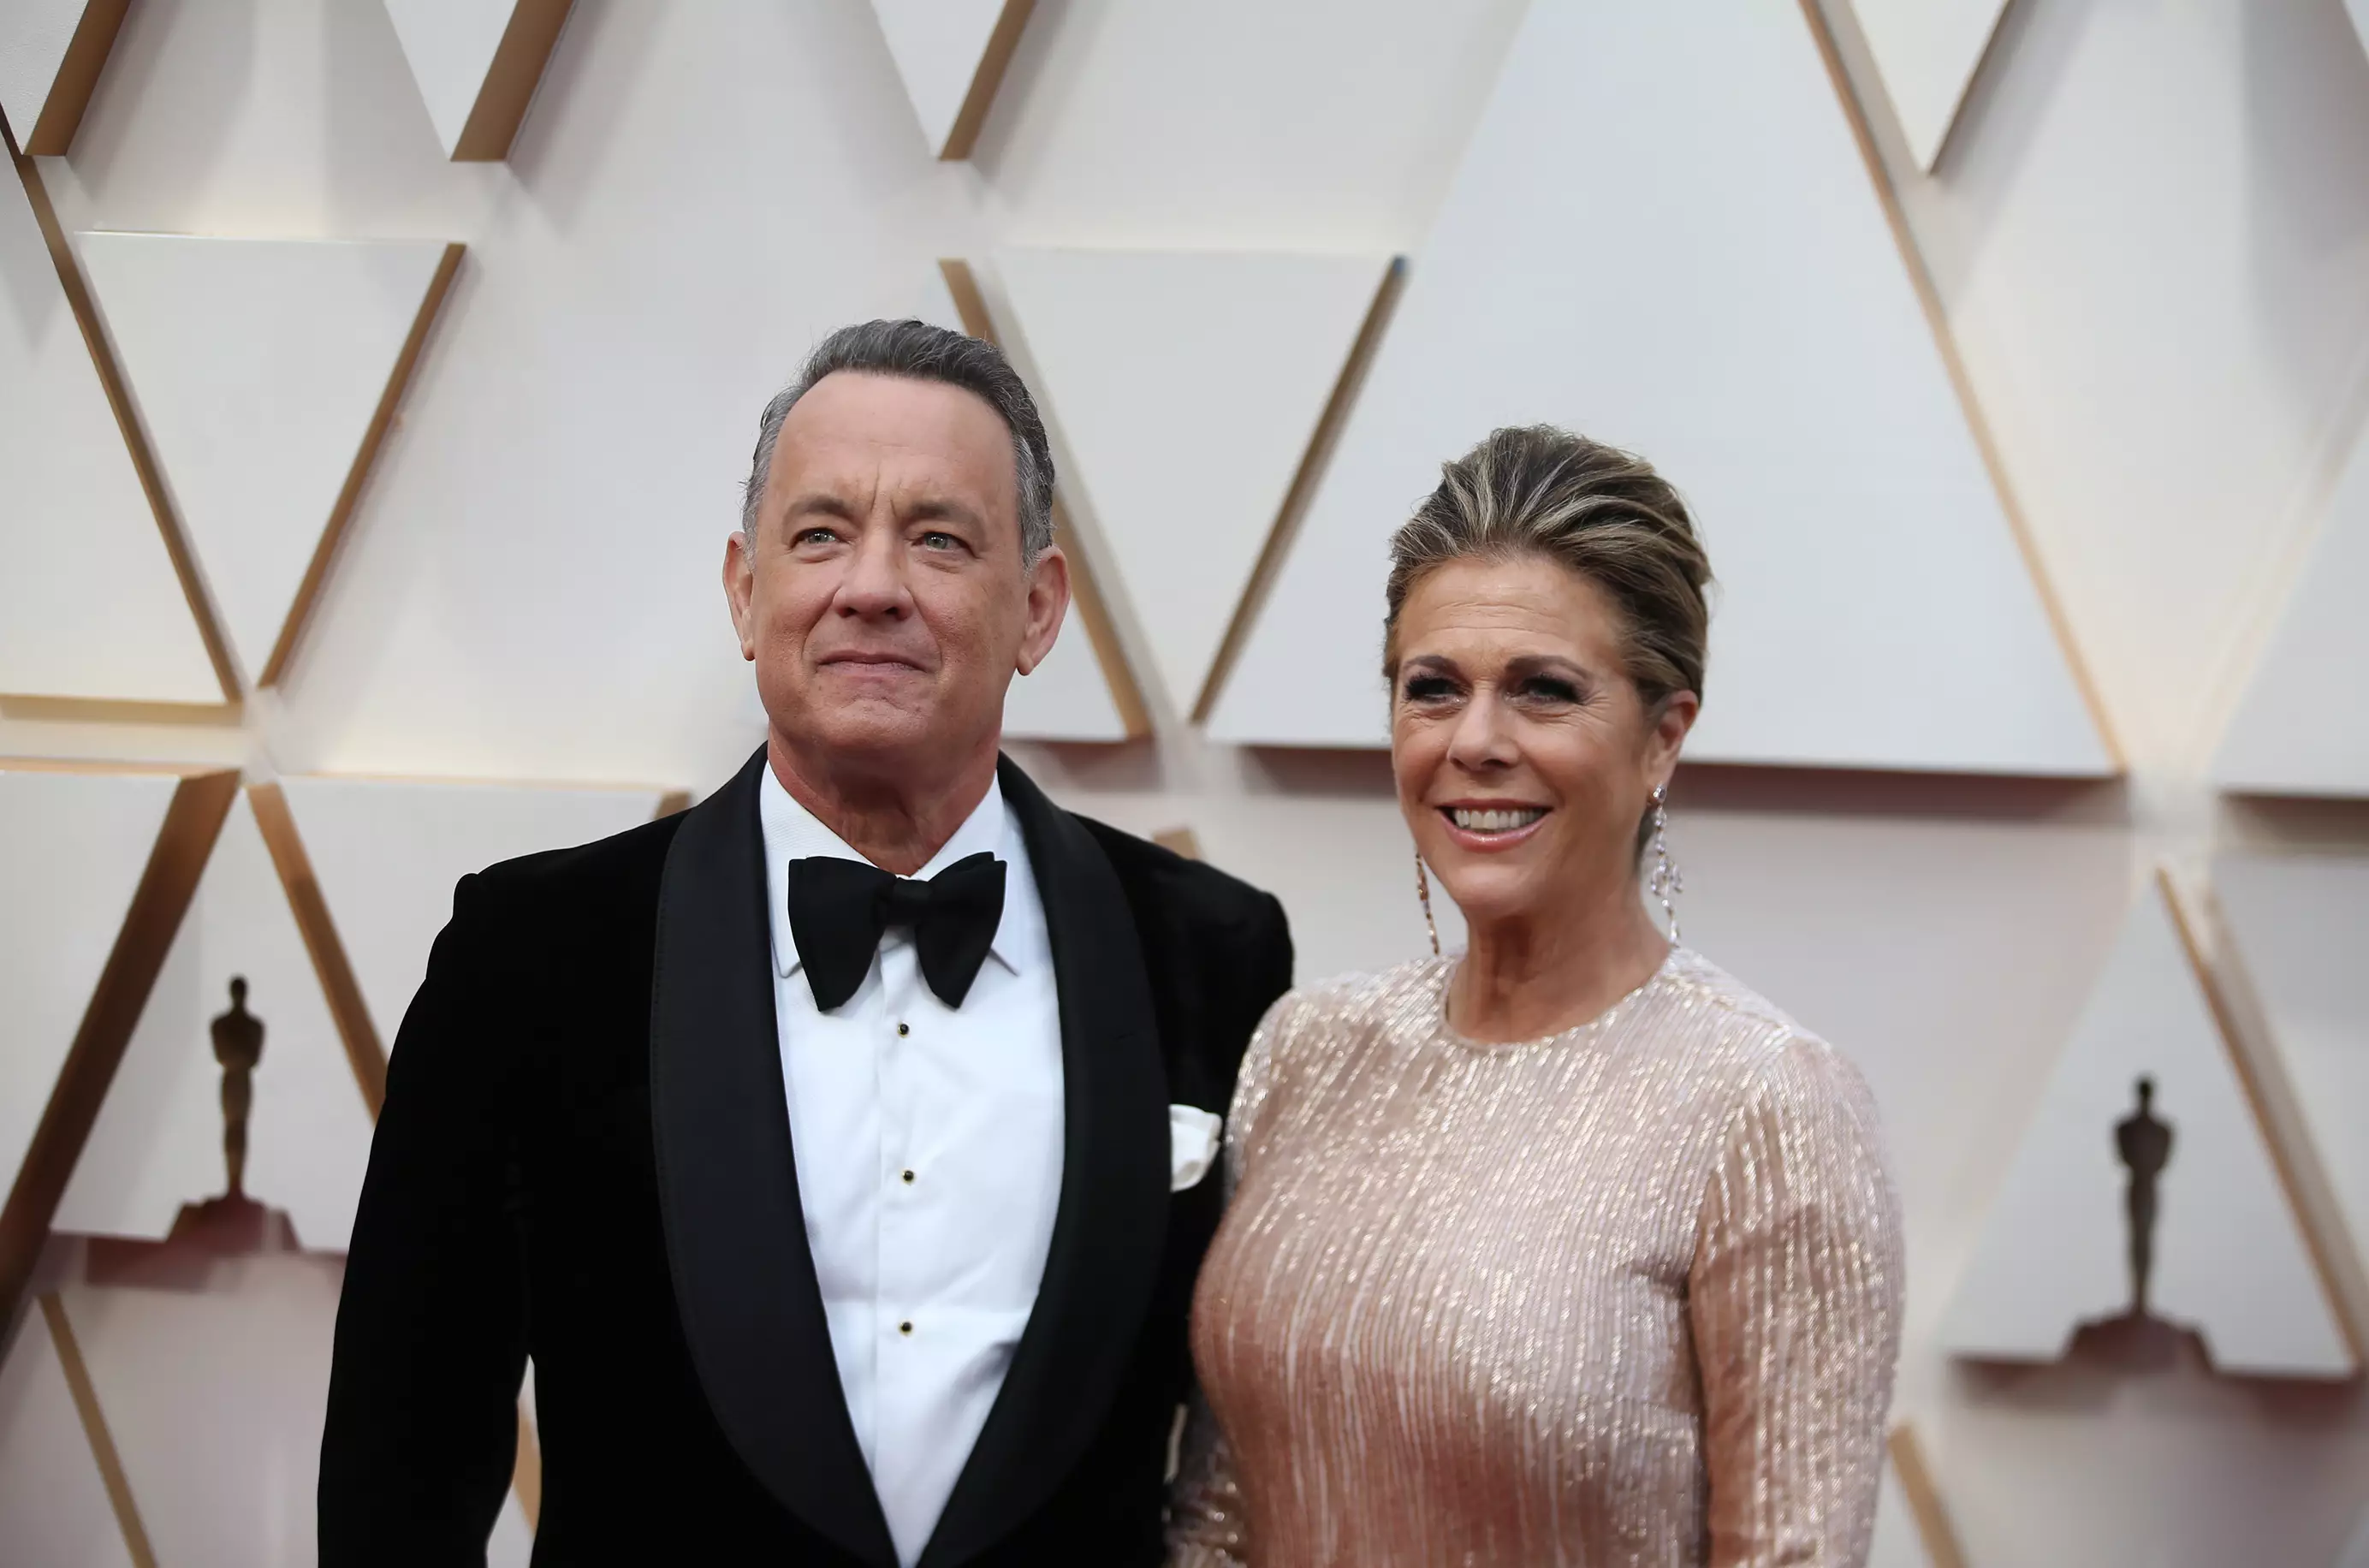 Hanks and wife Rita Wilson recently contracted and beat coronavirus.